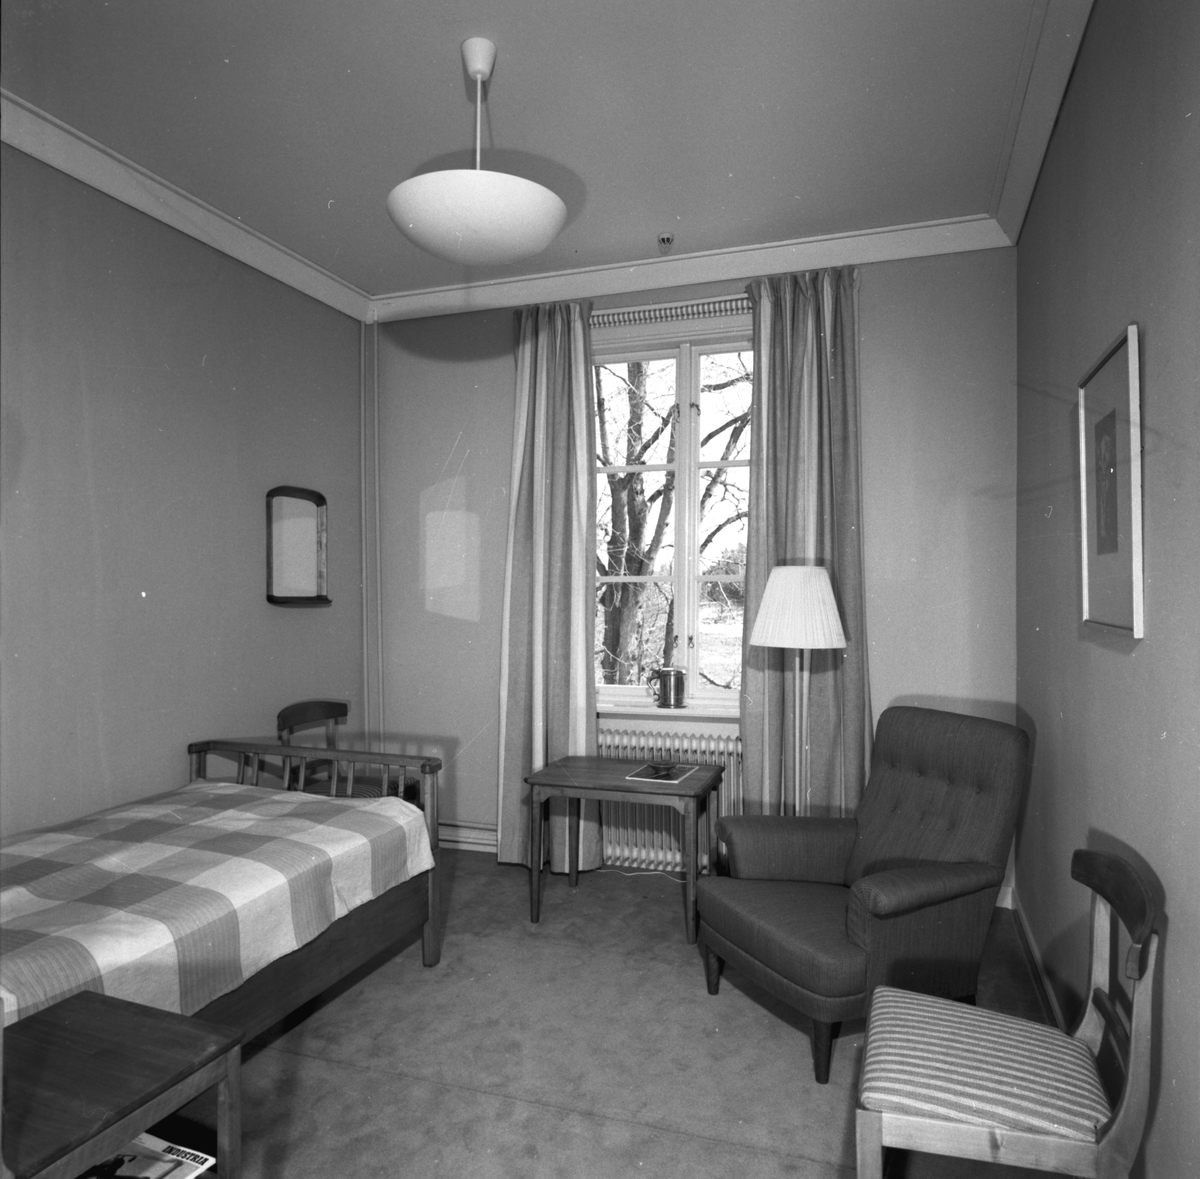 En av sovrummen på Holmsund Herrgård. Korsnäs AB. Den 20 april 1960
